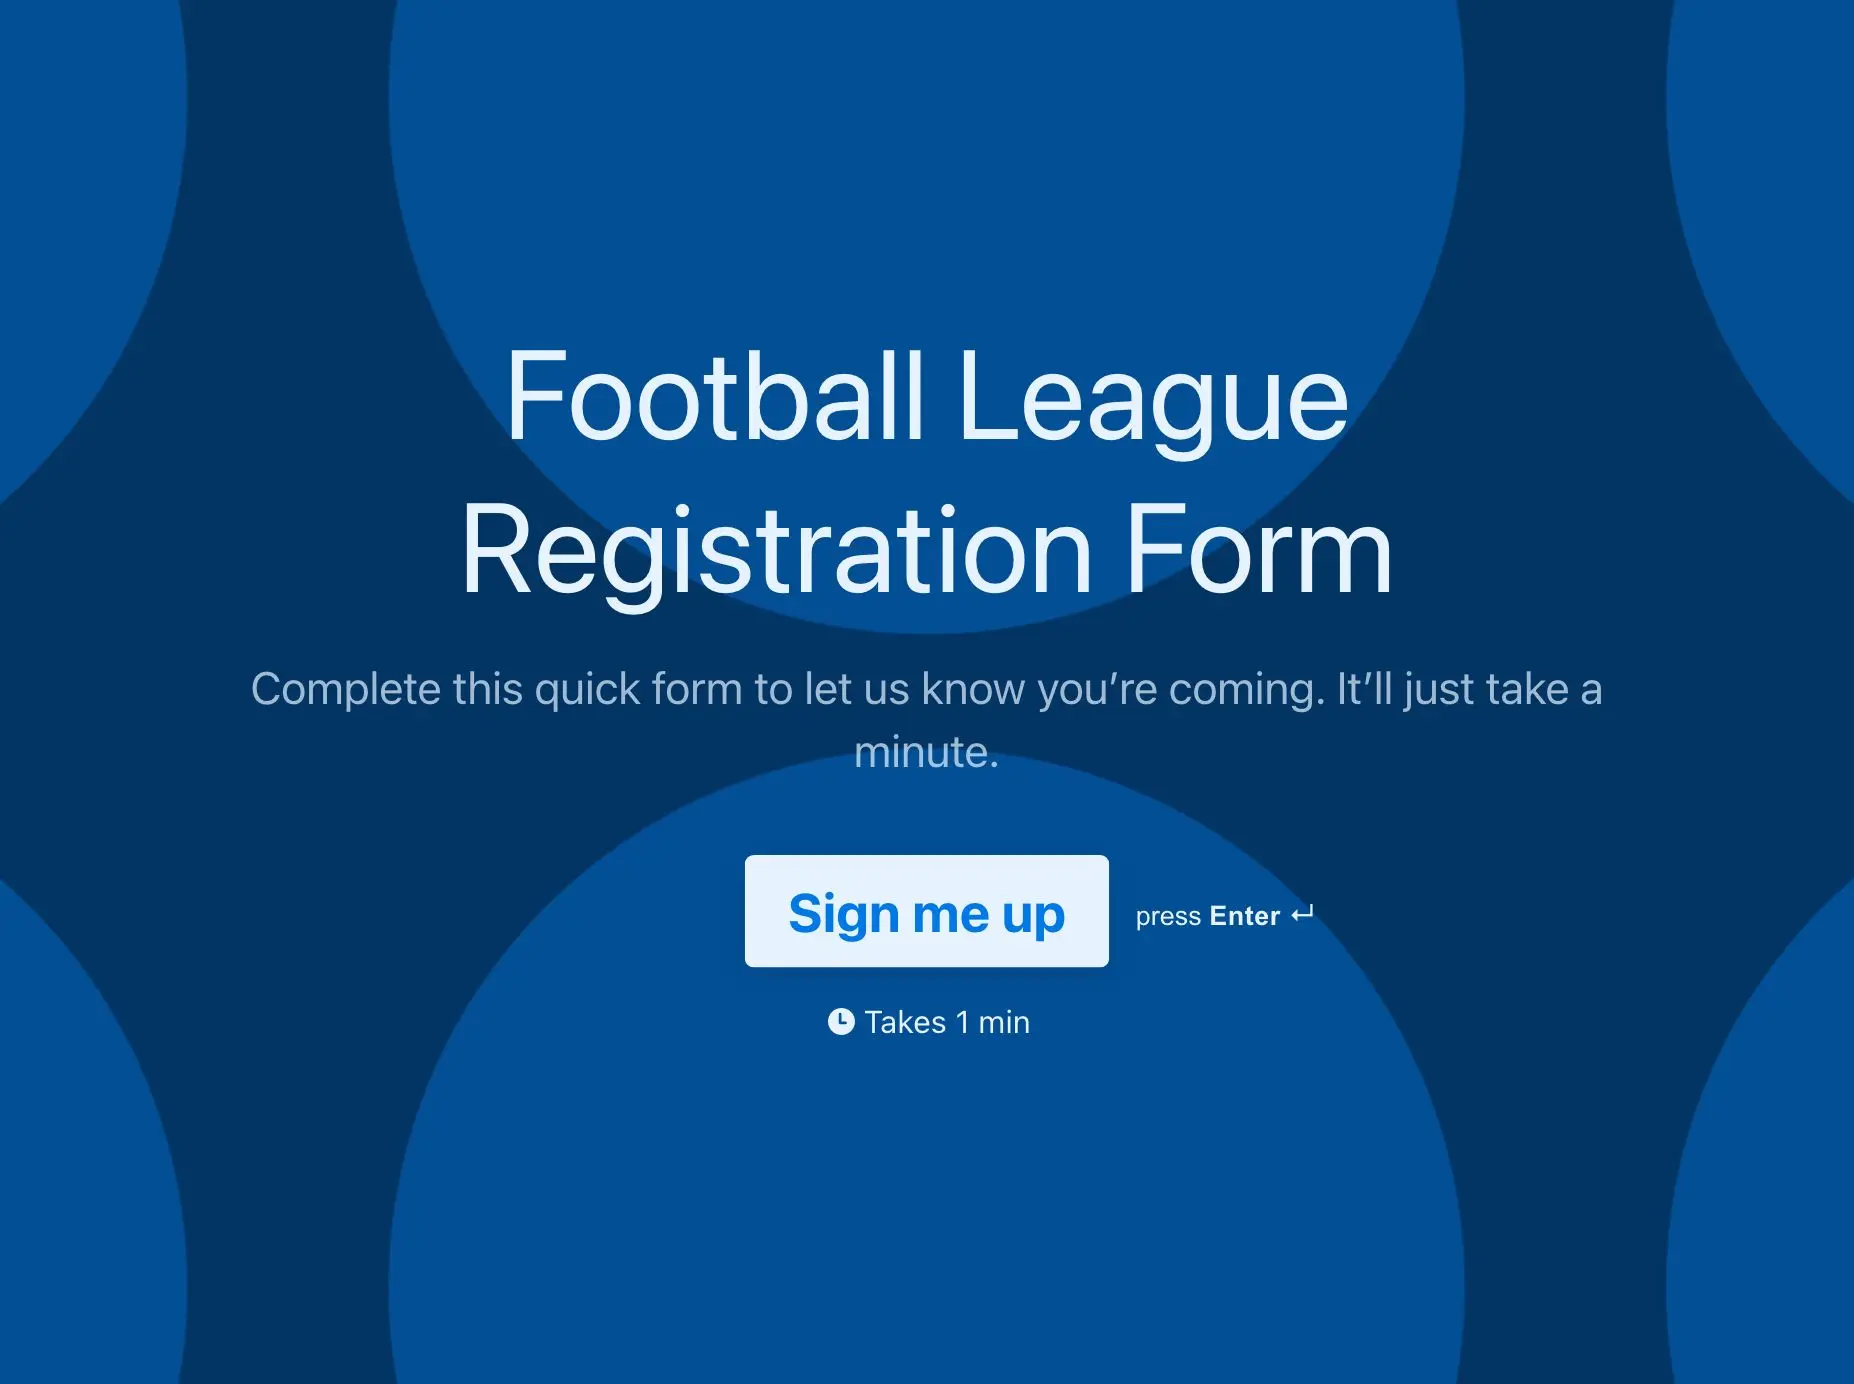 Football League Registration Form Template Hero